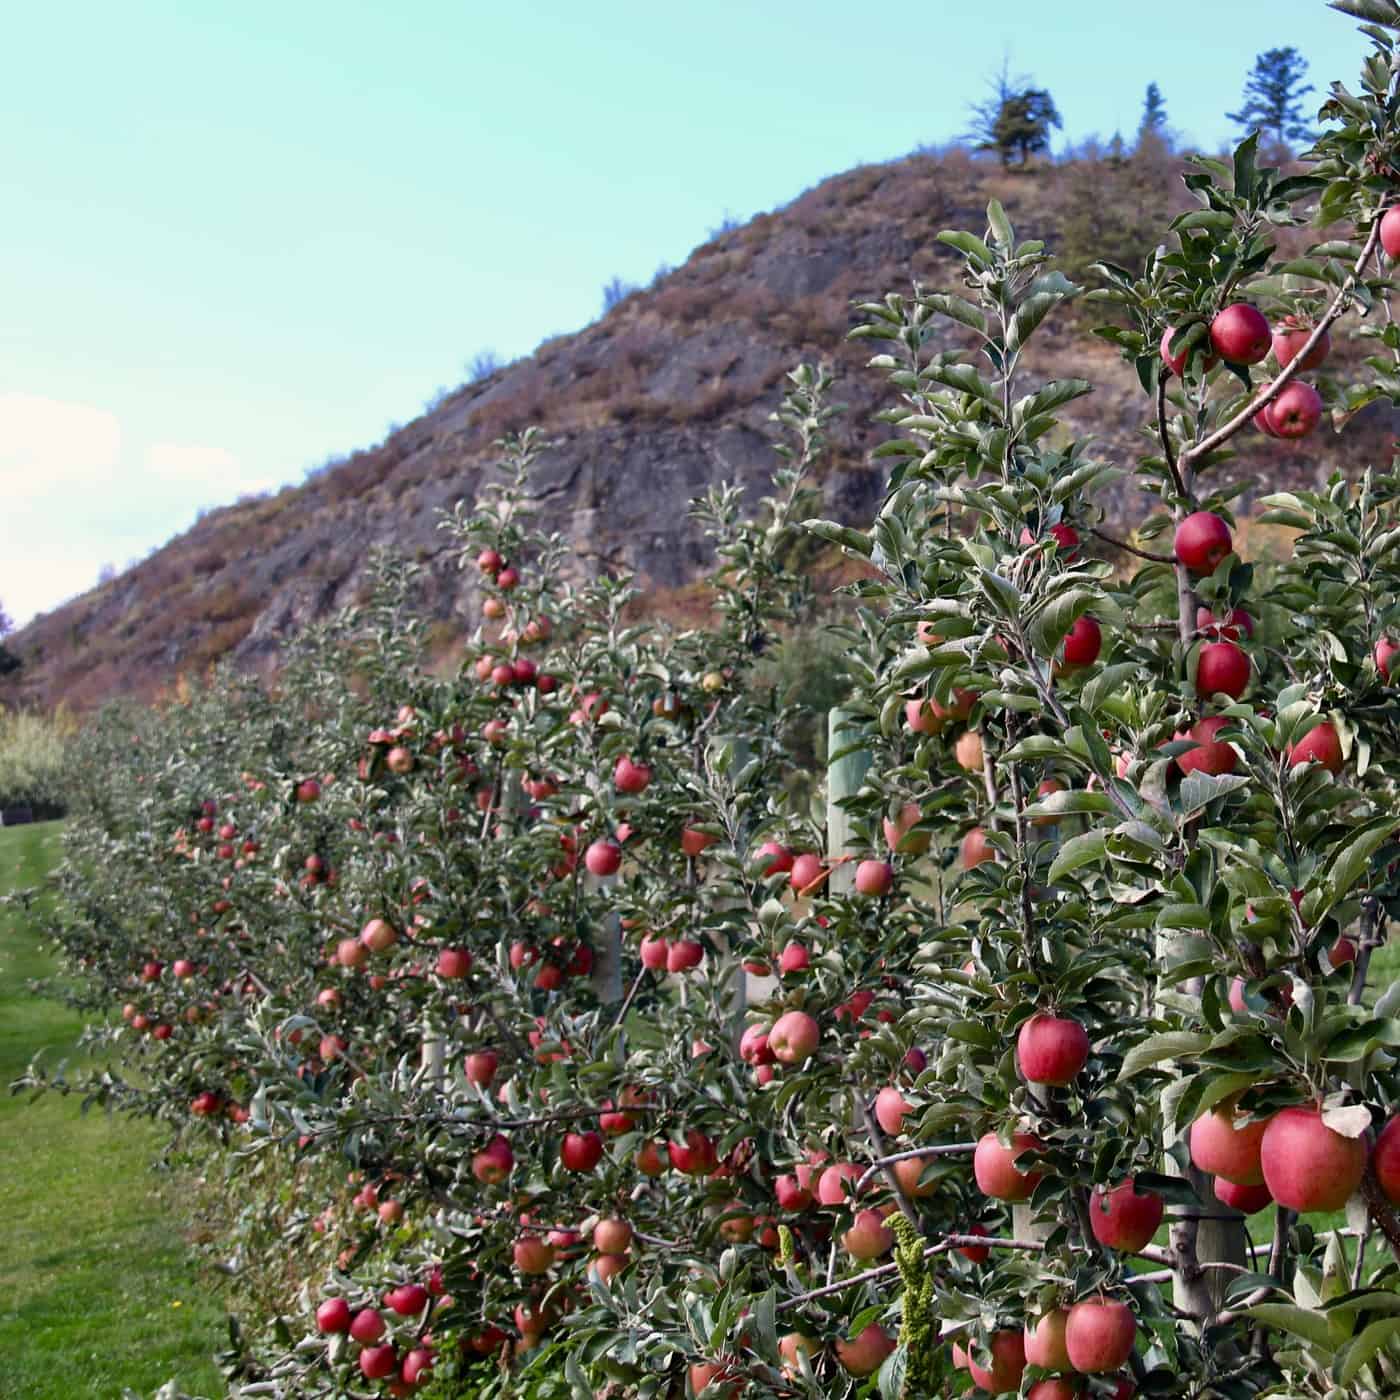 Growing a row of healthy fertilized apple trees